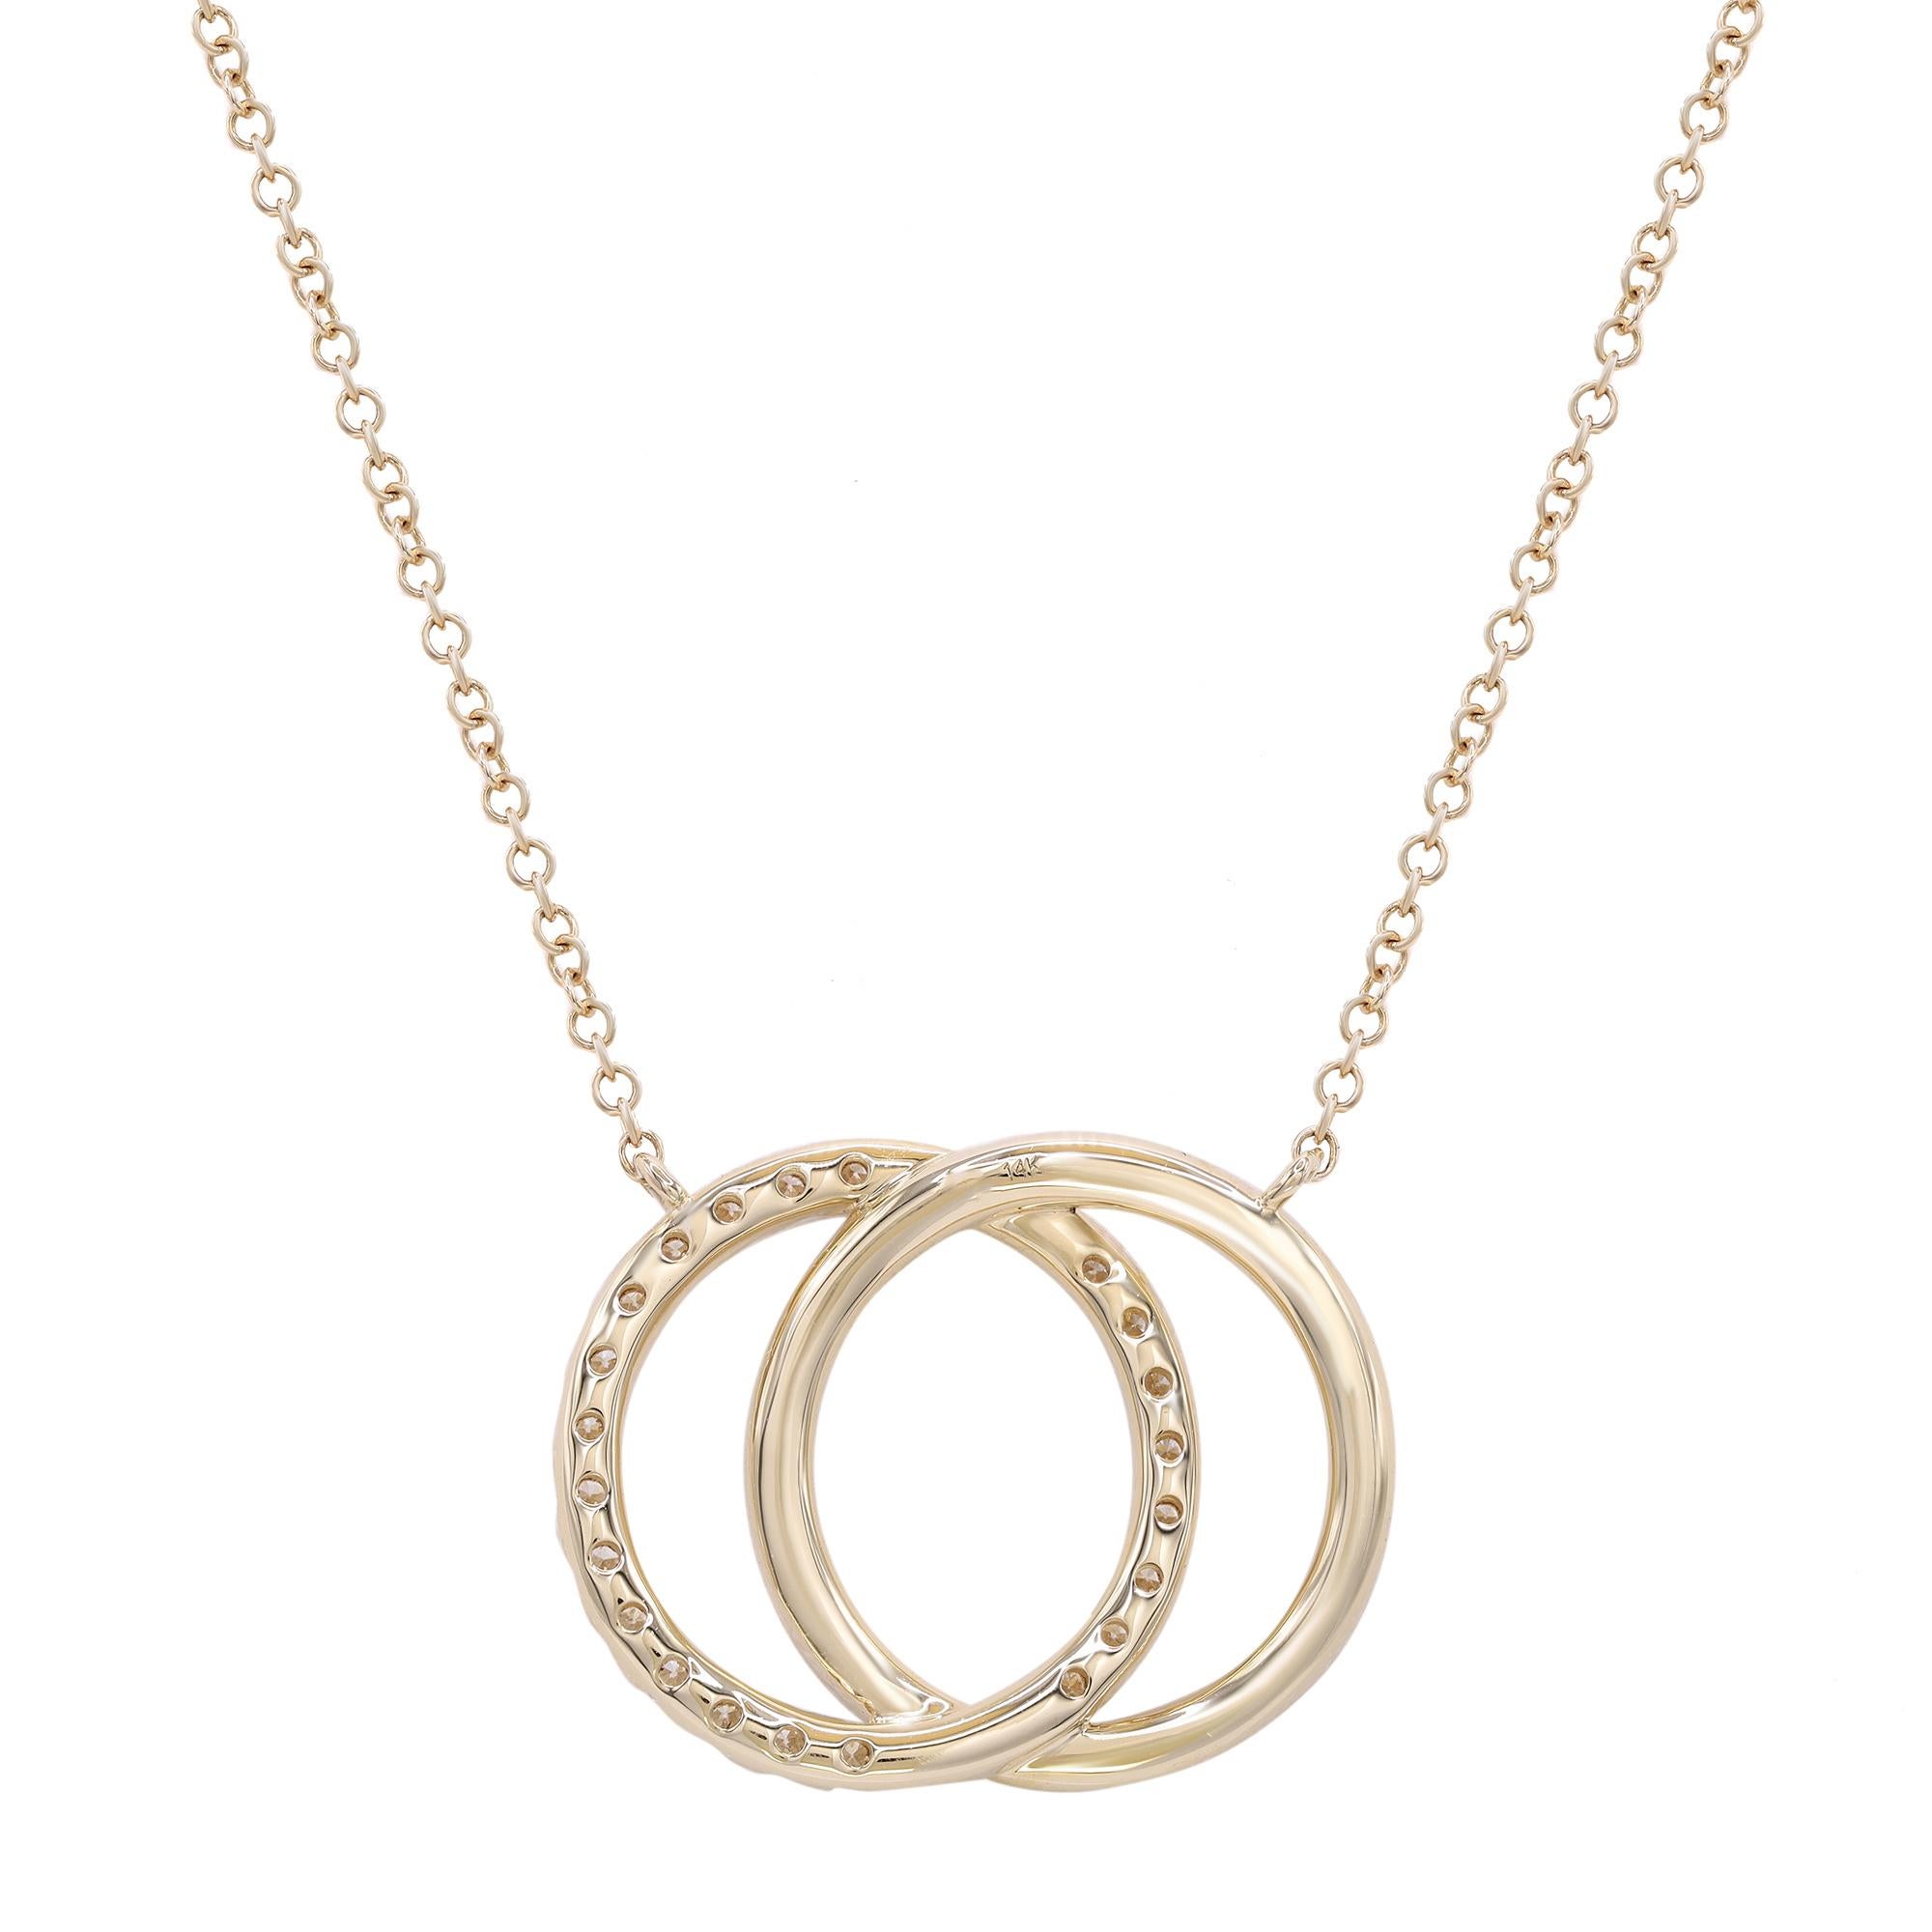 Modern Rachel Koen Diamond Interlocking Rings Pendant Necklace 14K Yellow Gold 0.31cttw For Sale